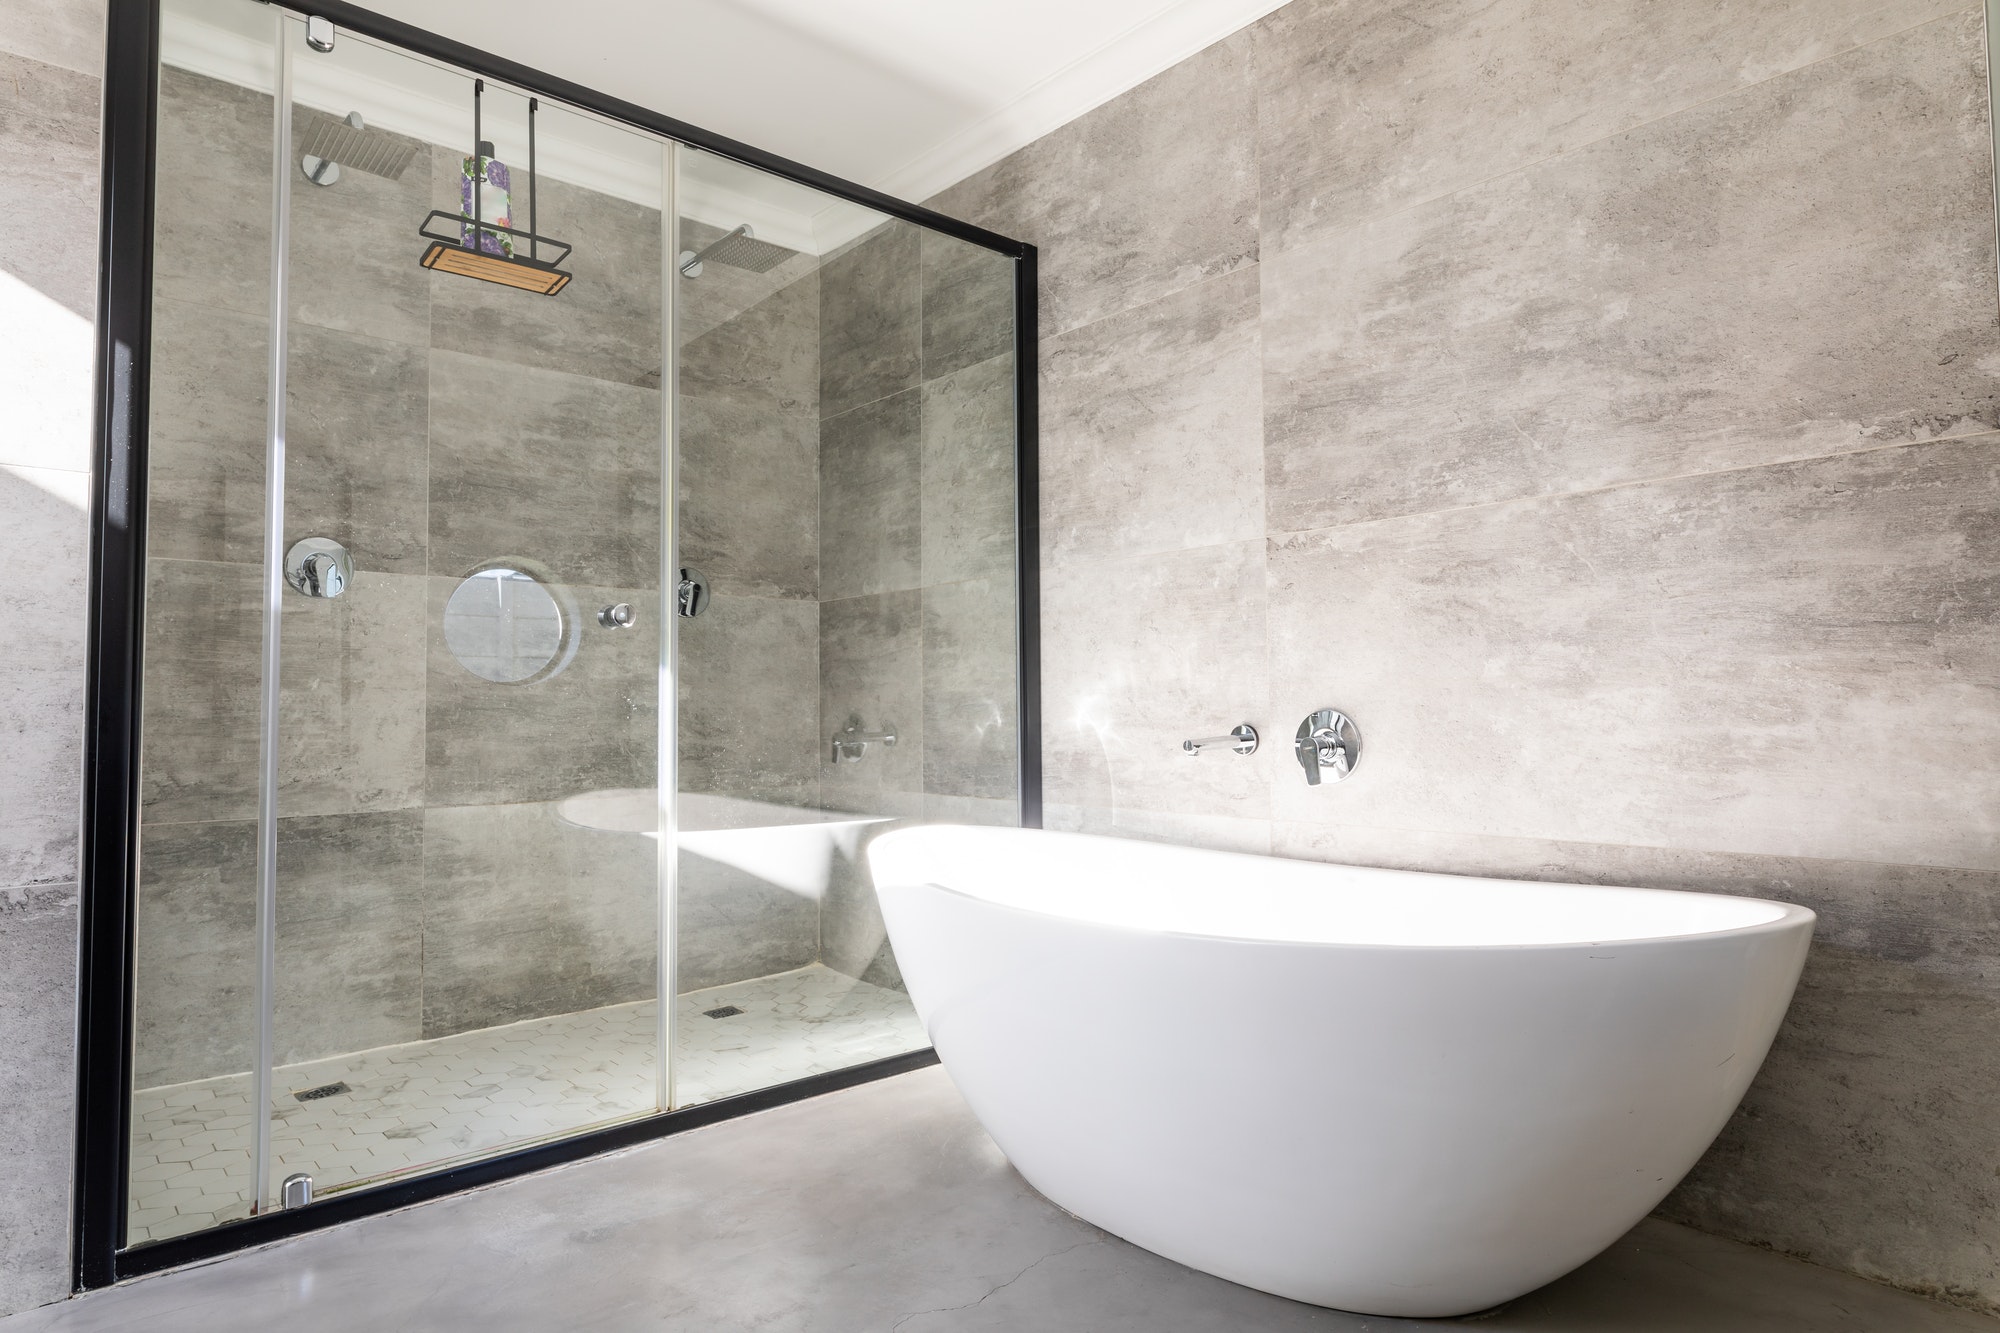 https://www.futuristarchitecture.com/wp-content/uploads/2022/03/empty-bathtub-by-modern-shower-in-bathroom-at-home.jpg